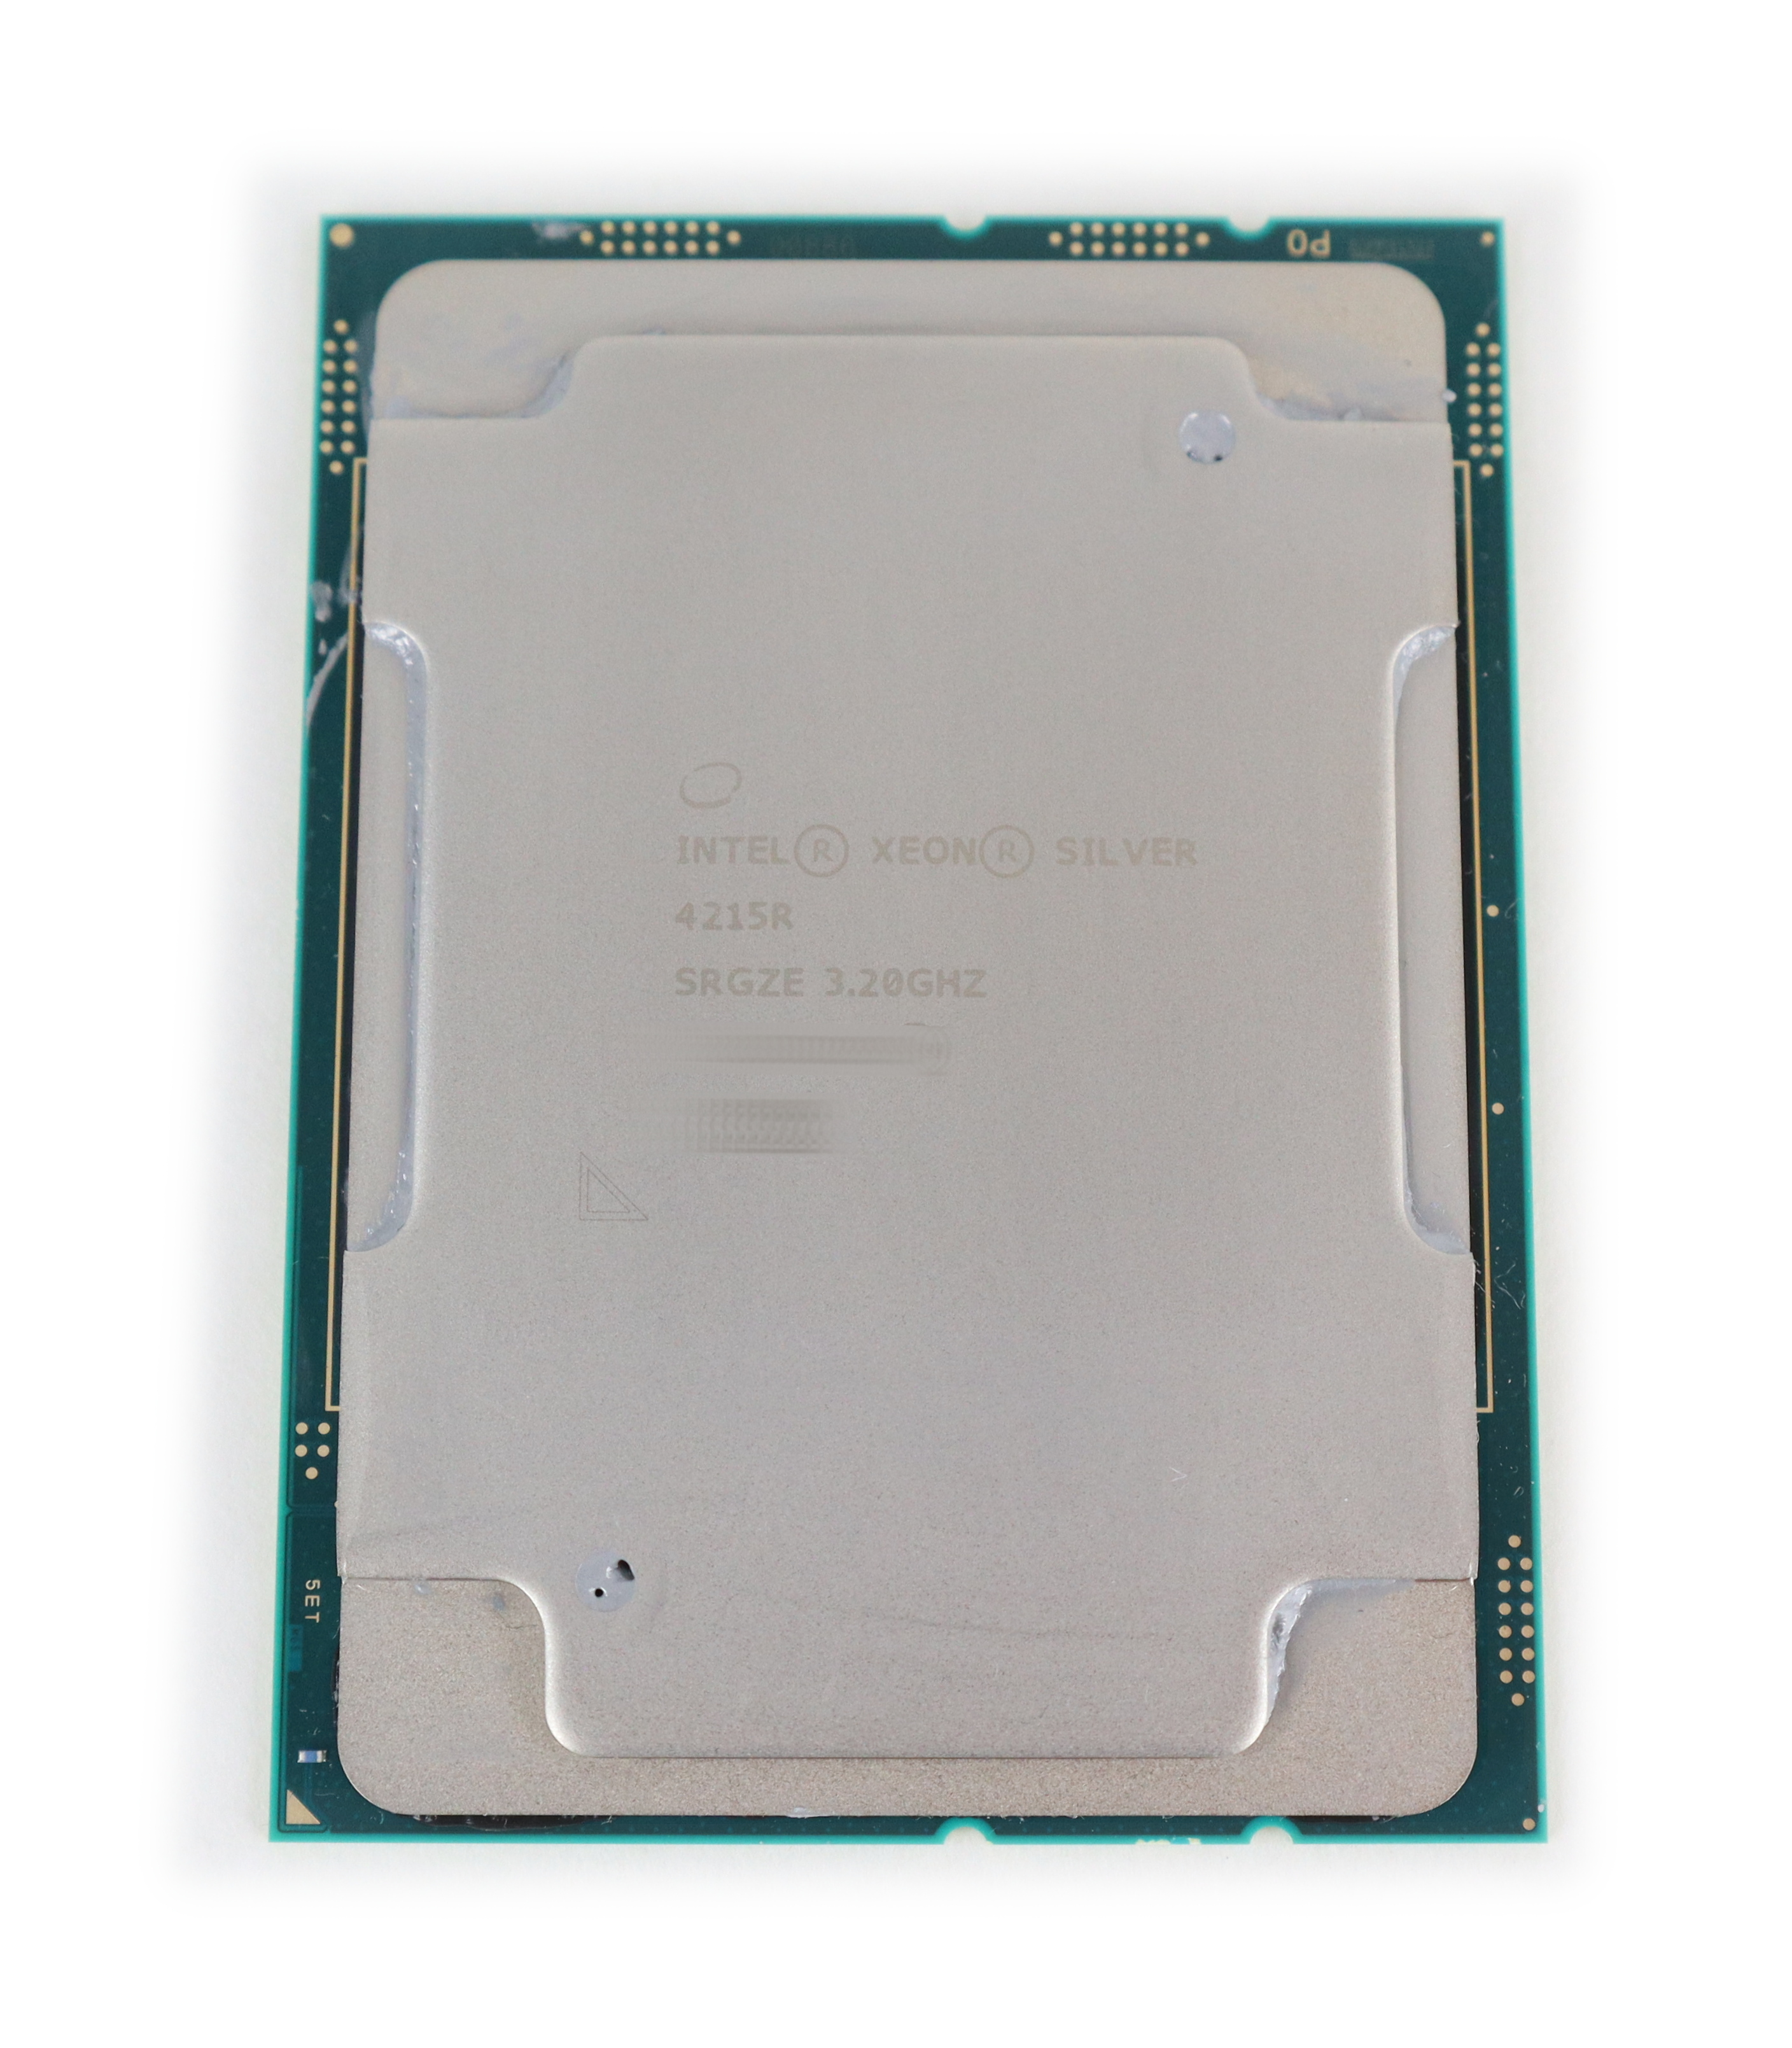 Intel Xeon Silver 4215R 3.2GHz 8C 16T Sockets FCLGA3647 SRGZE